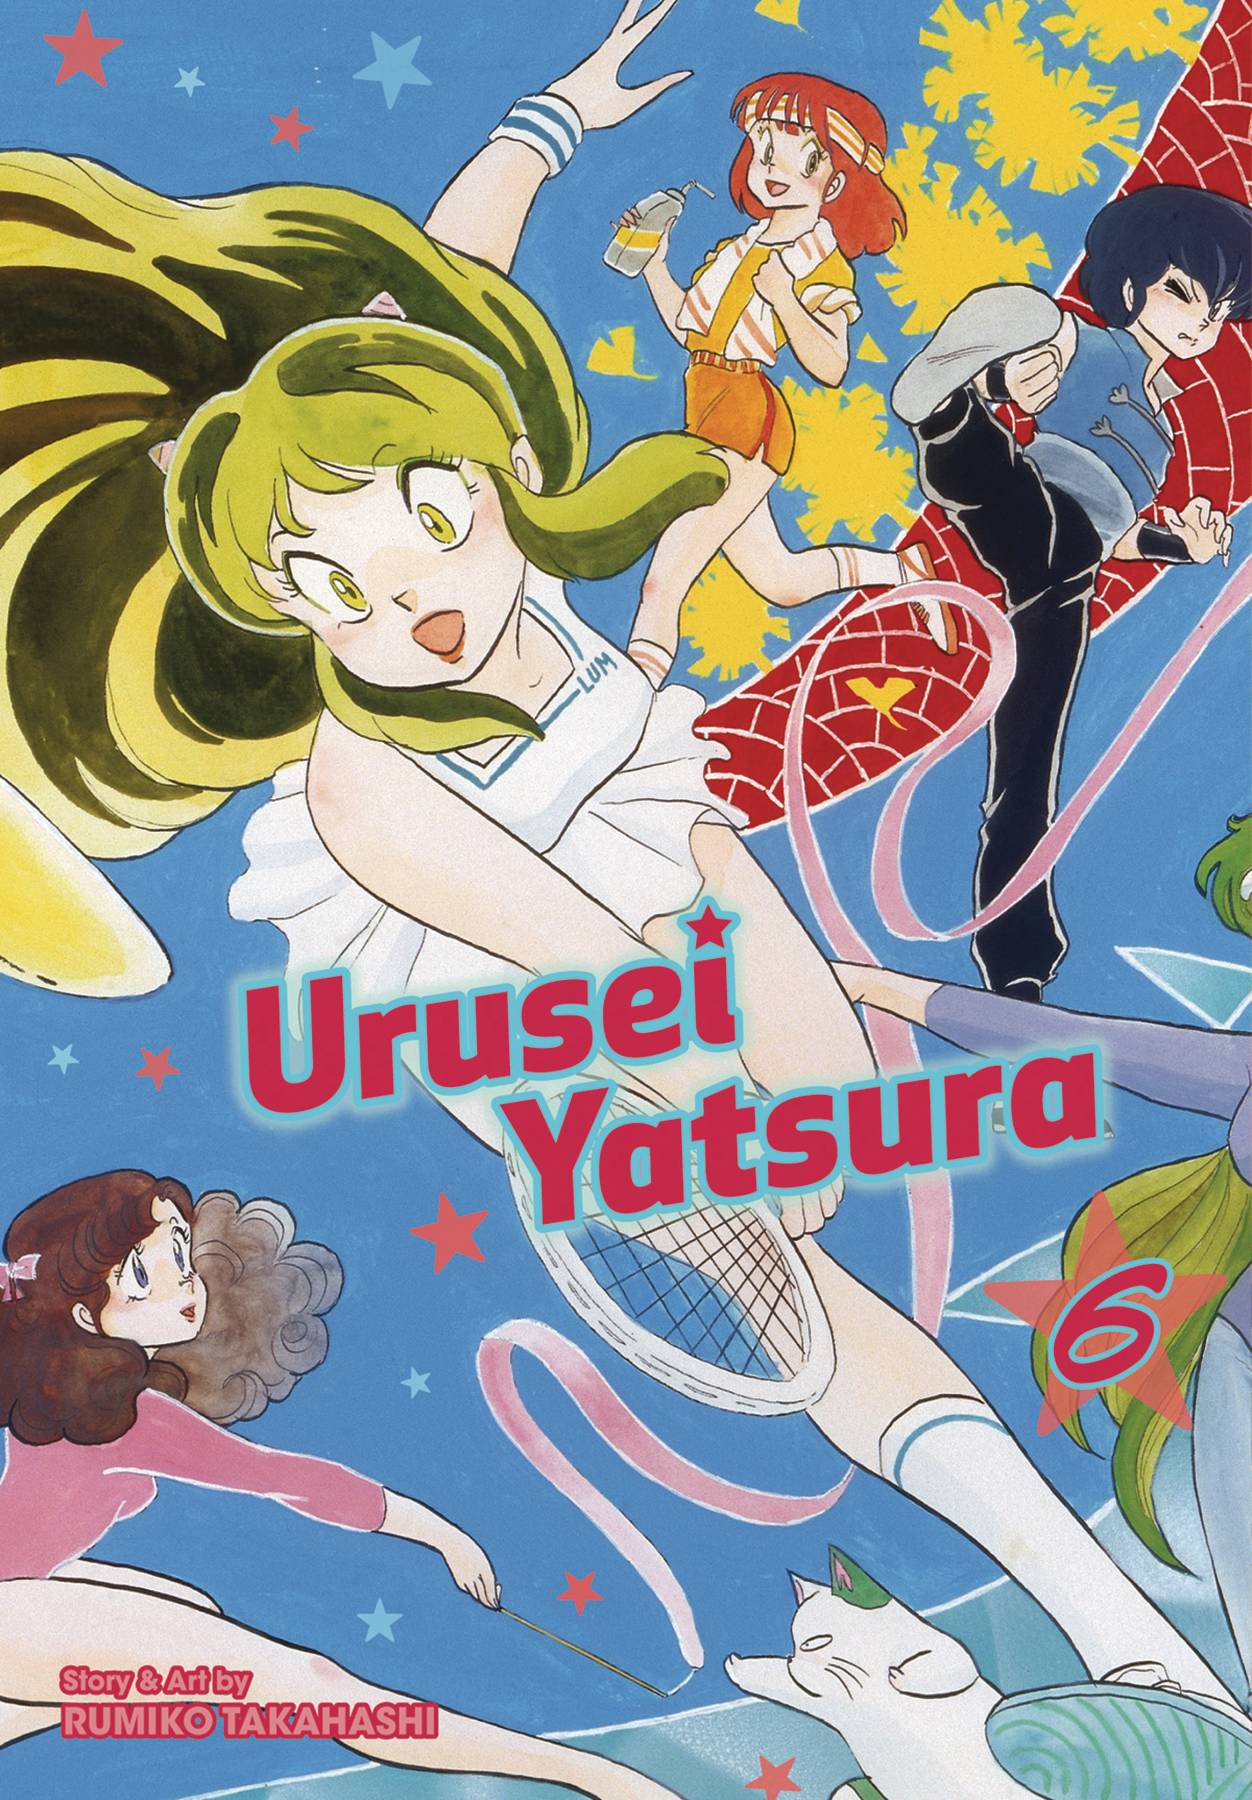 Urusei Yatsura Vol. 06